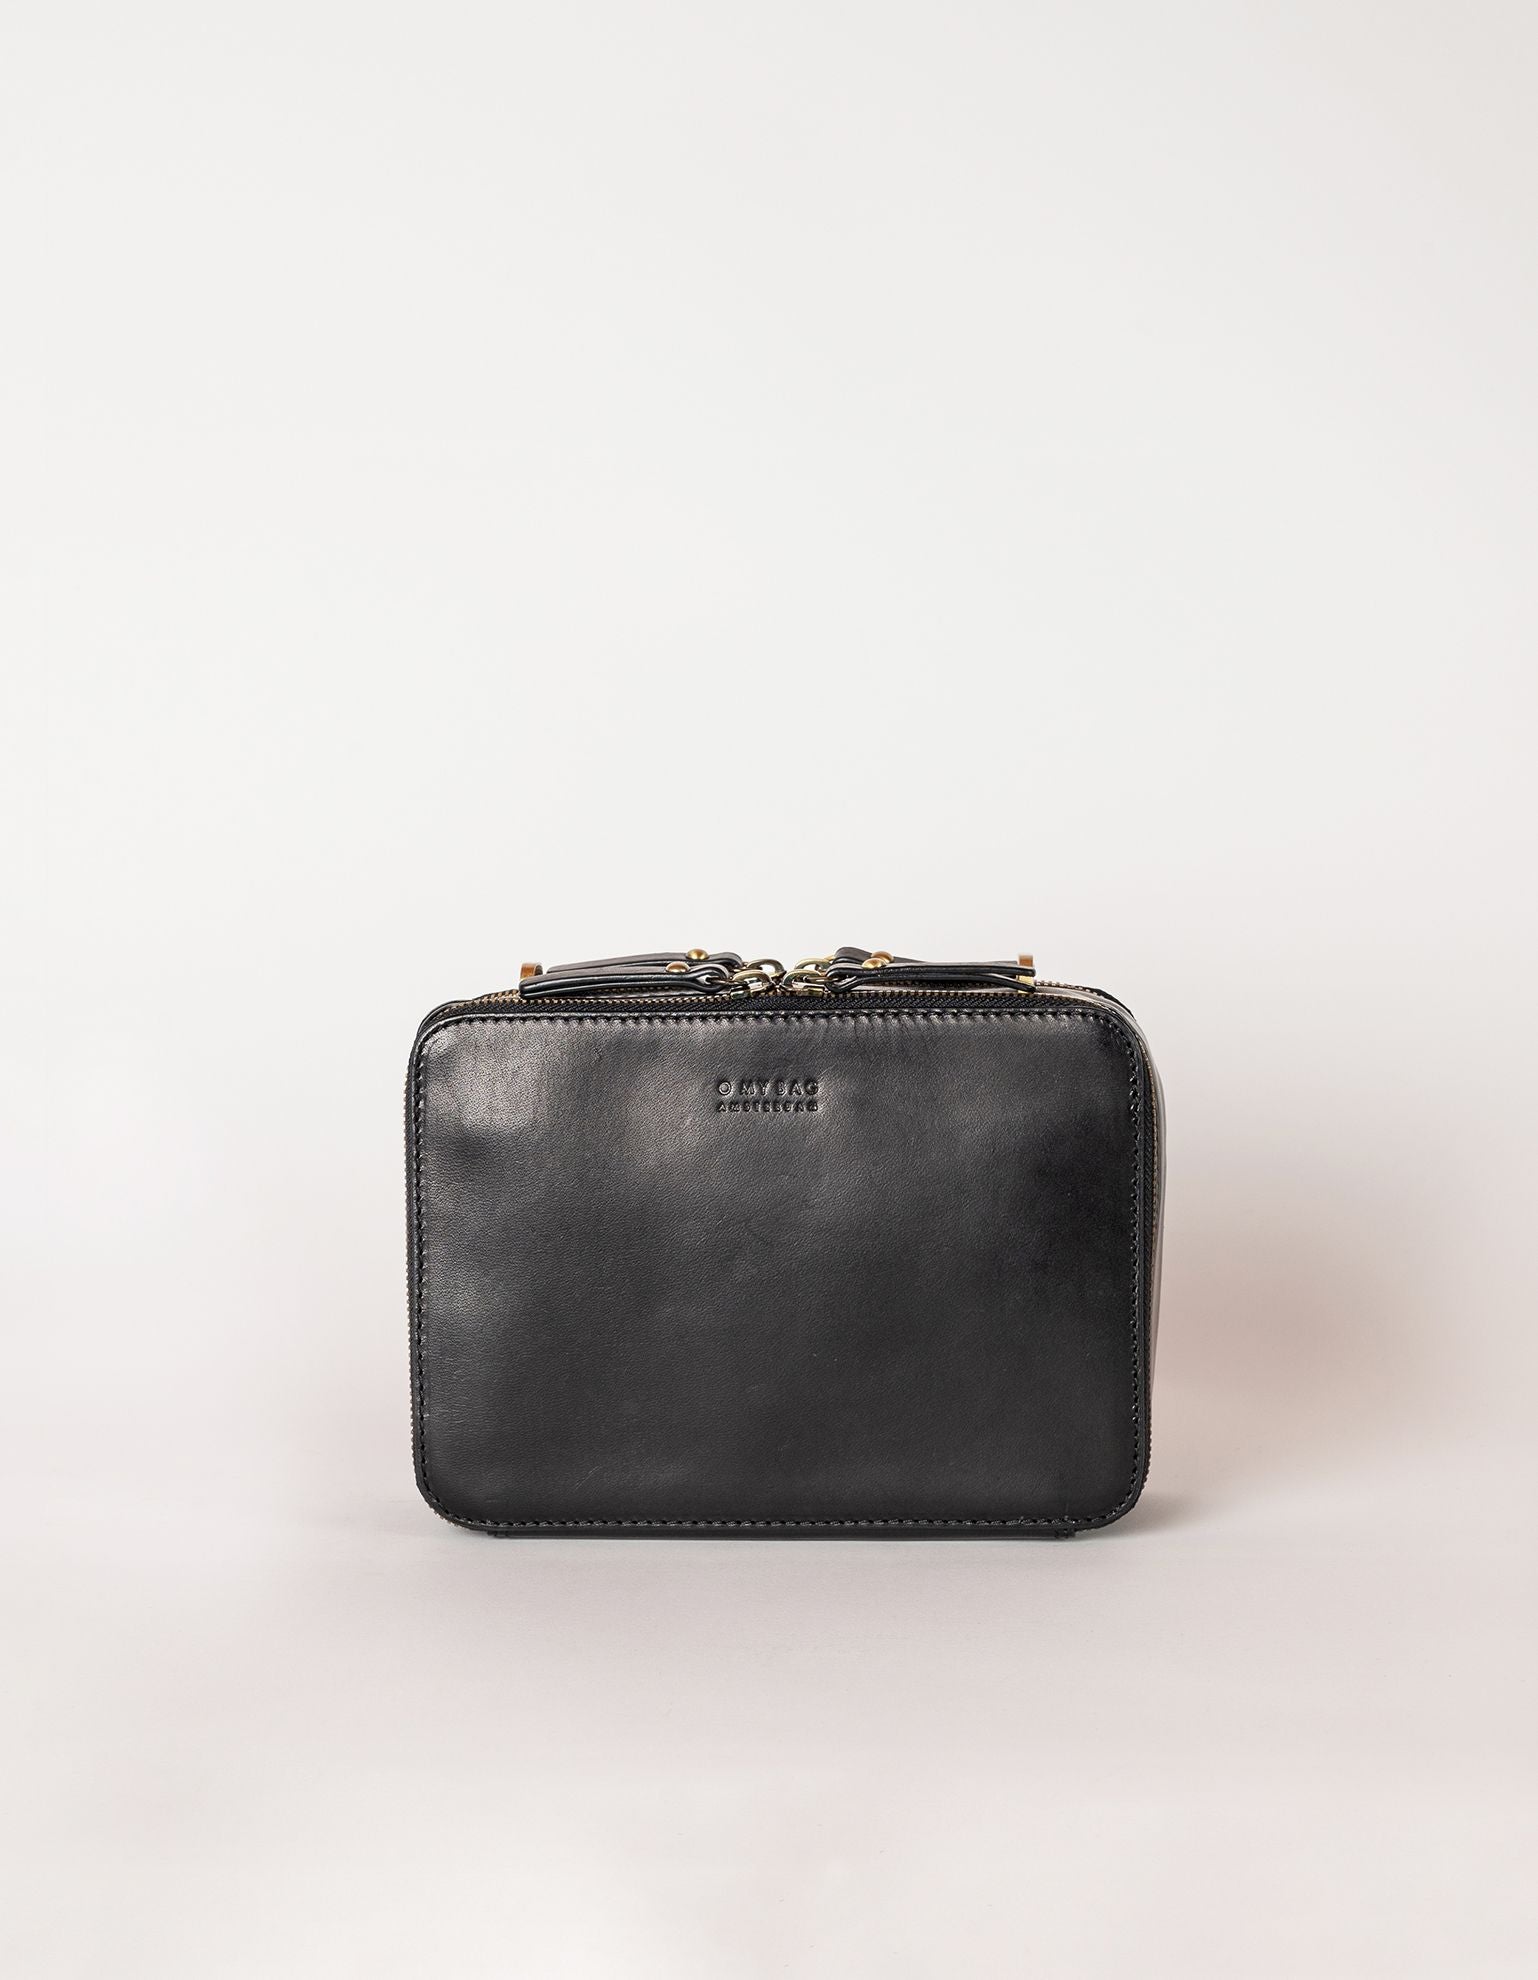 Bee's Box Bag - Black Classic Leather